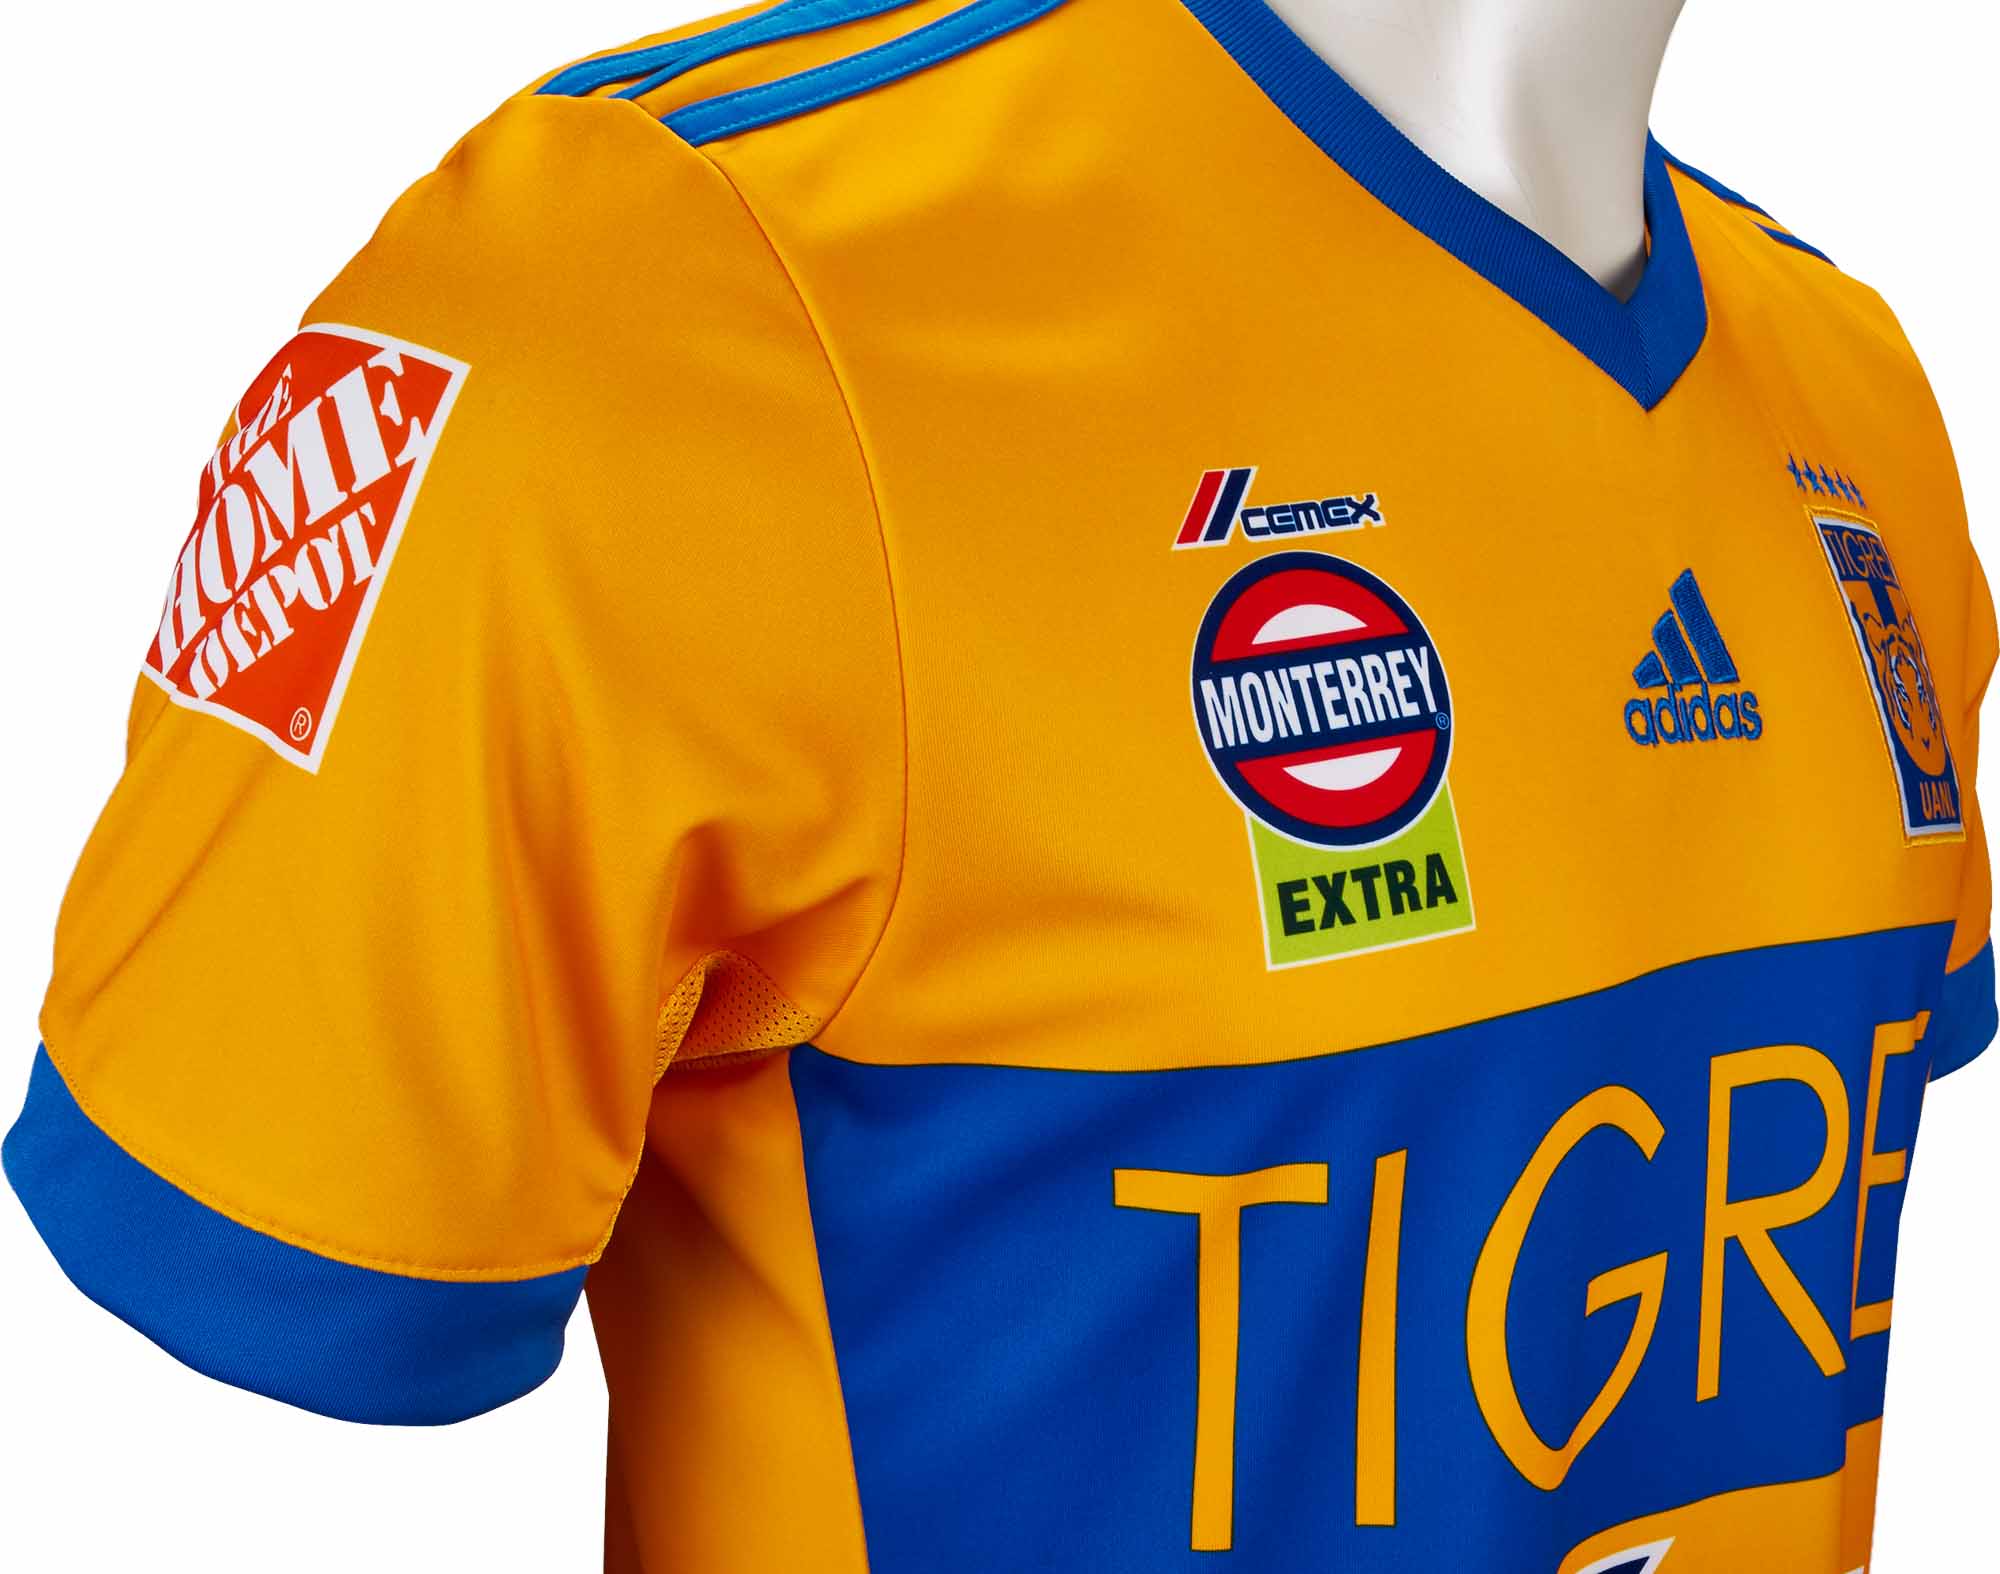 tigres jersey 2017